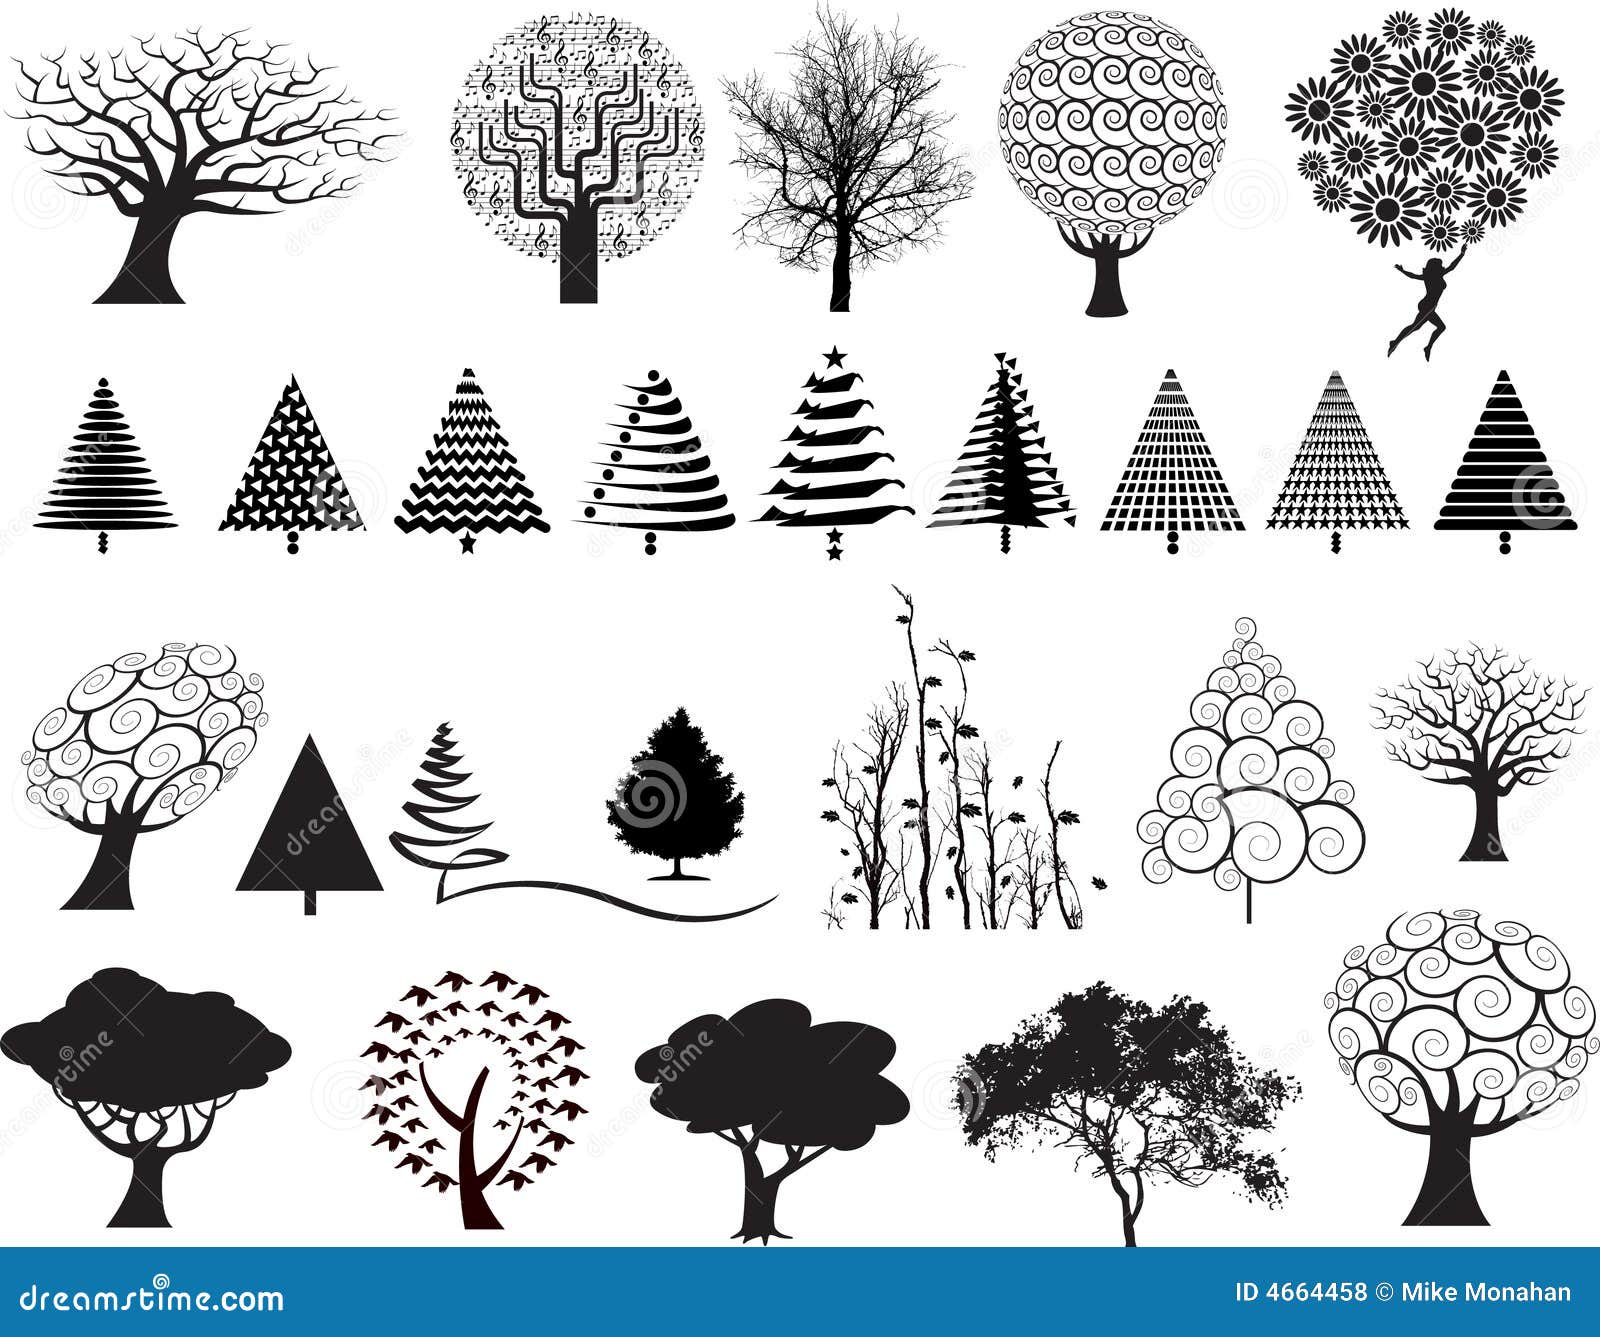 Tree Illustrations Royalty Free Stock Photos  Image: 4664458